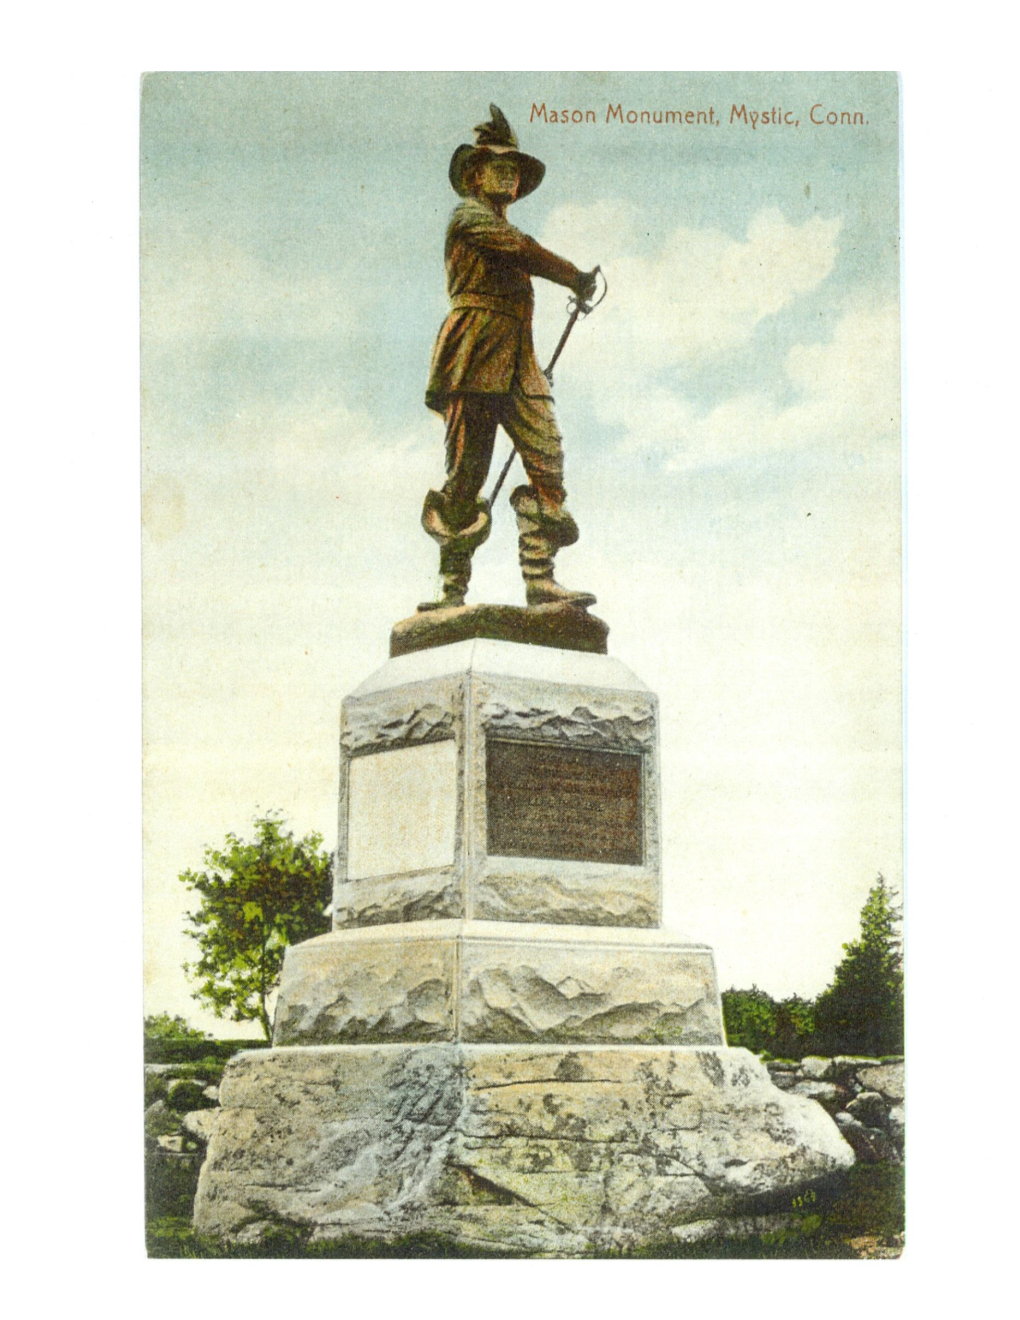 John Mason Statue in Mystic CT